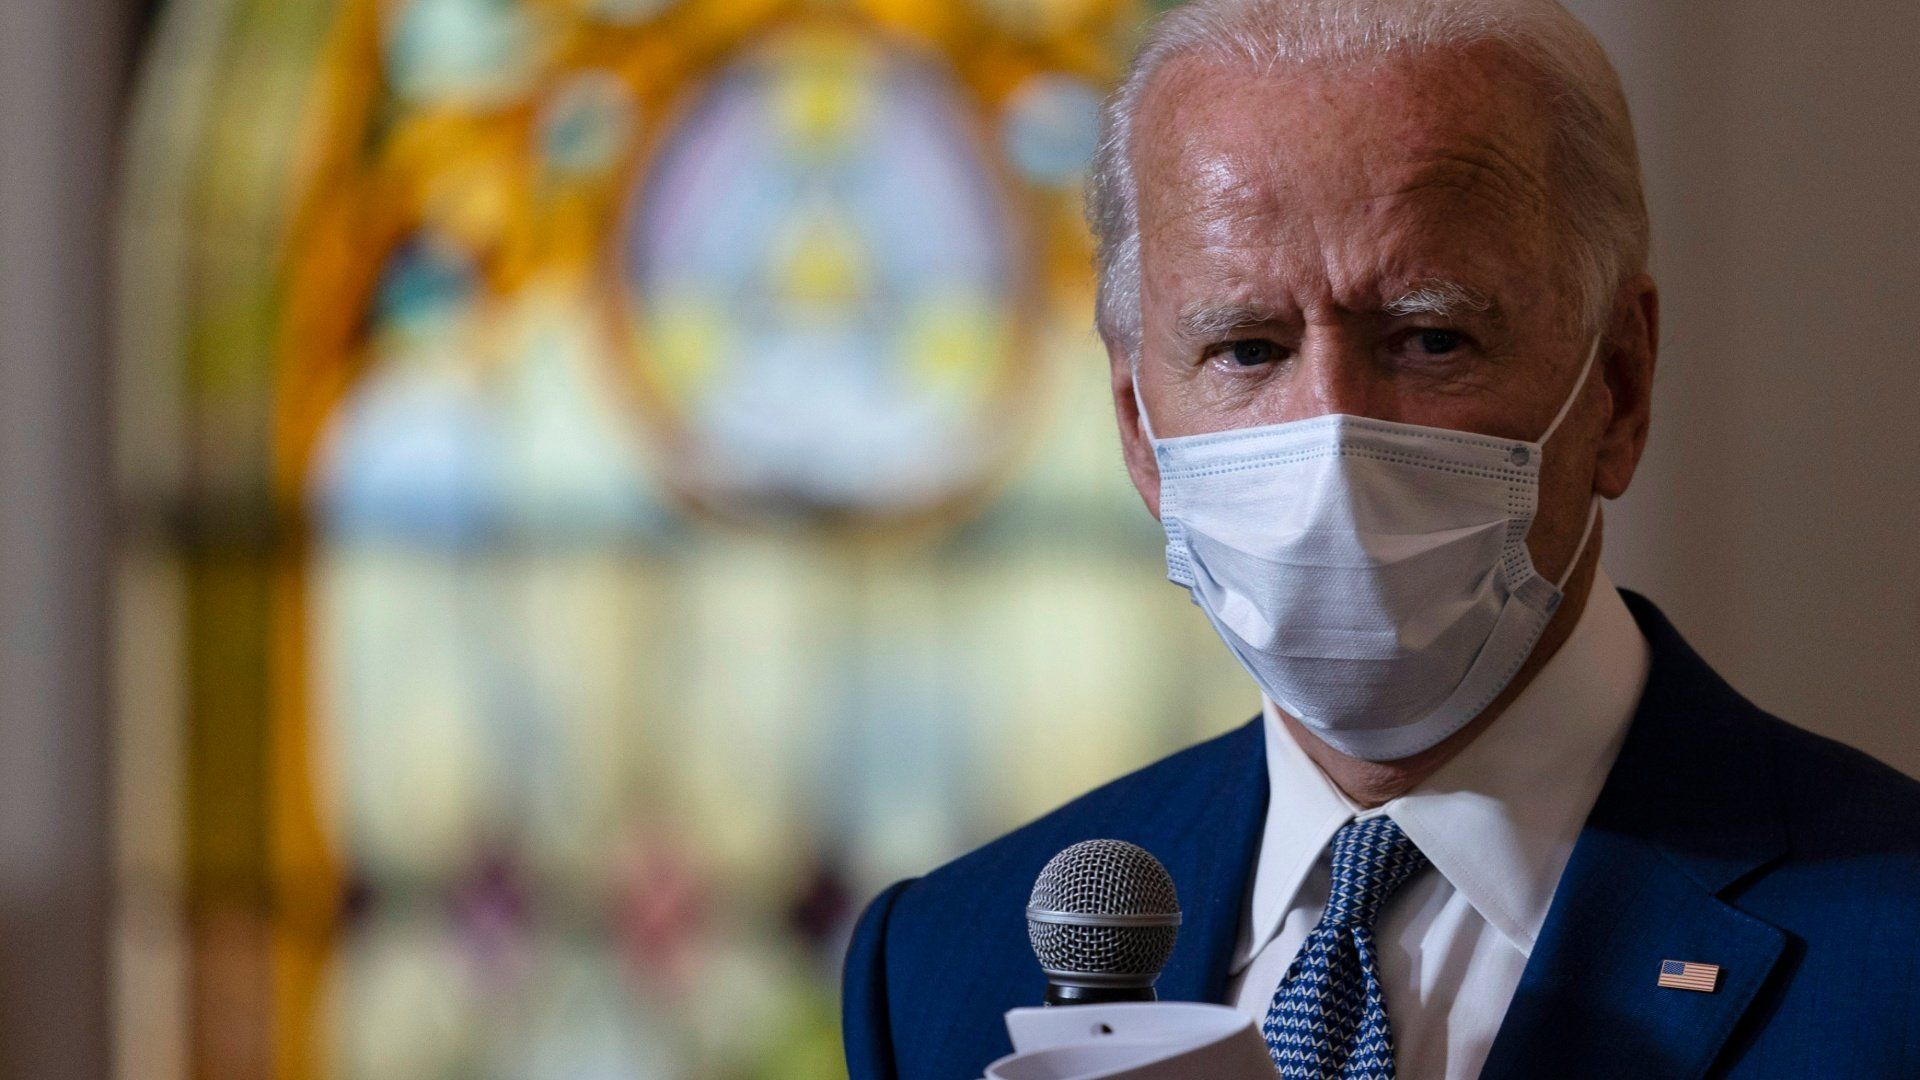 Biden, in Kenosha, Says US Confronting 'Original Sin'